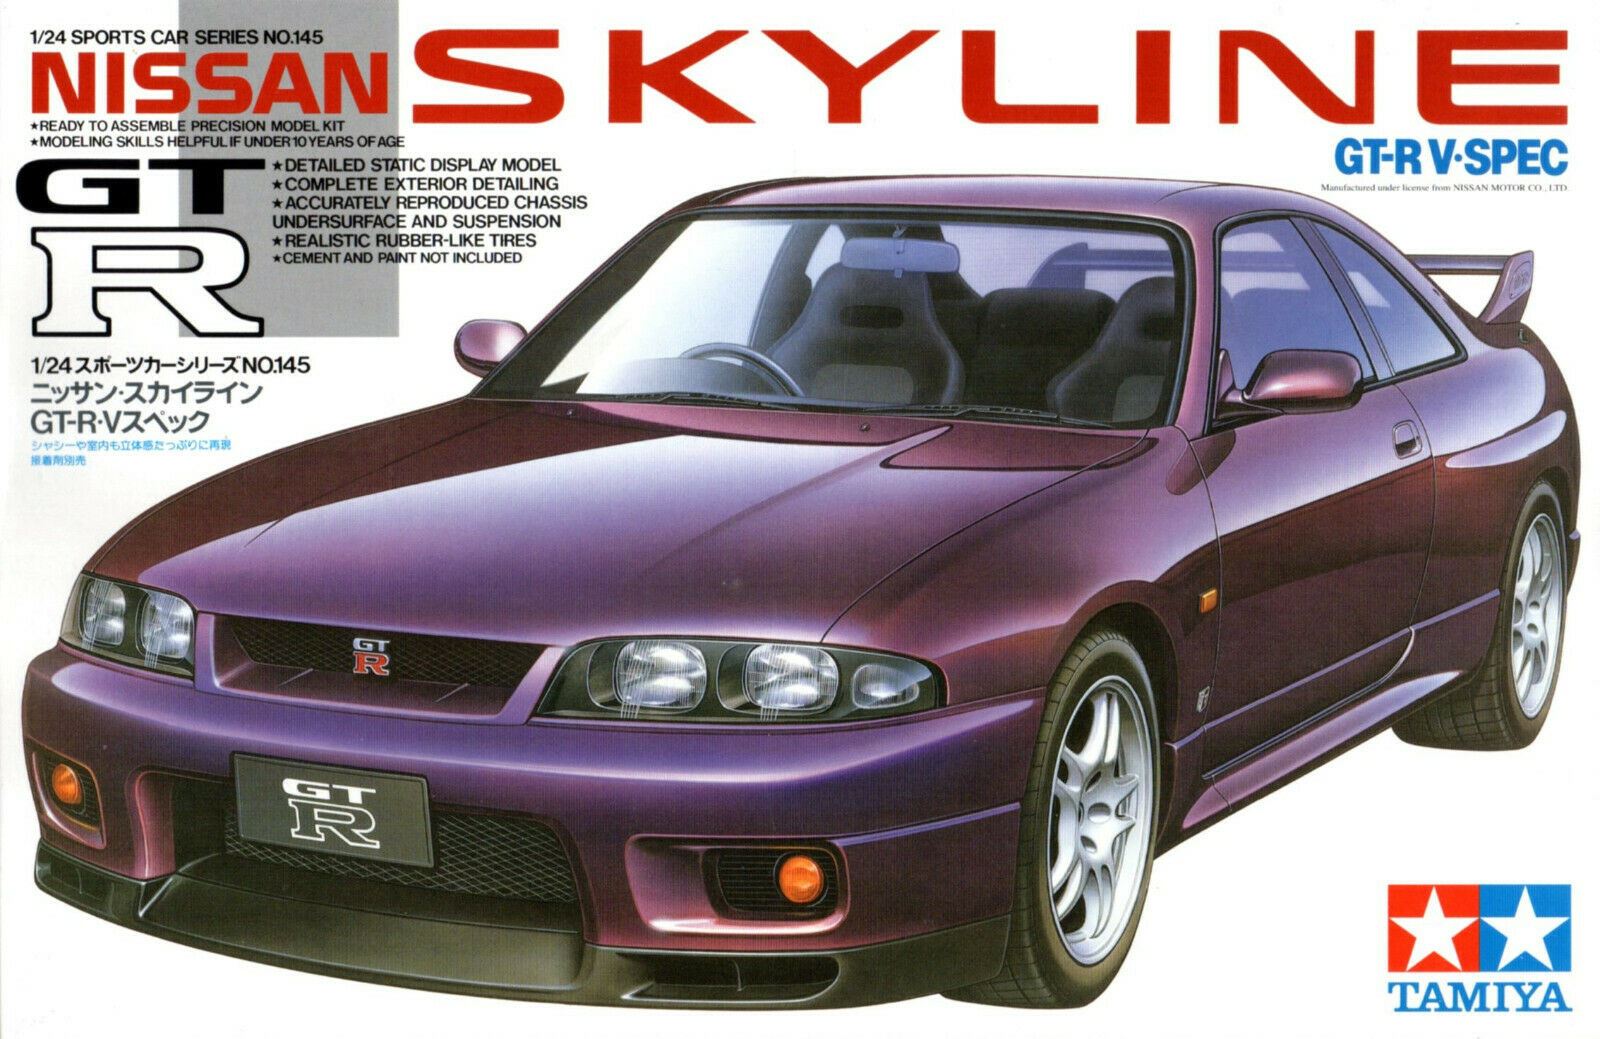 1:24 Scale Tamiya Nissan Skyline R33 GTR V-Spec Model Kit - Kent Models